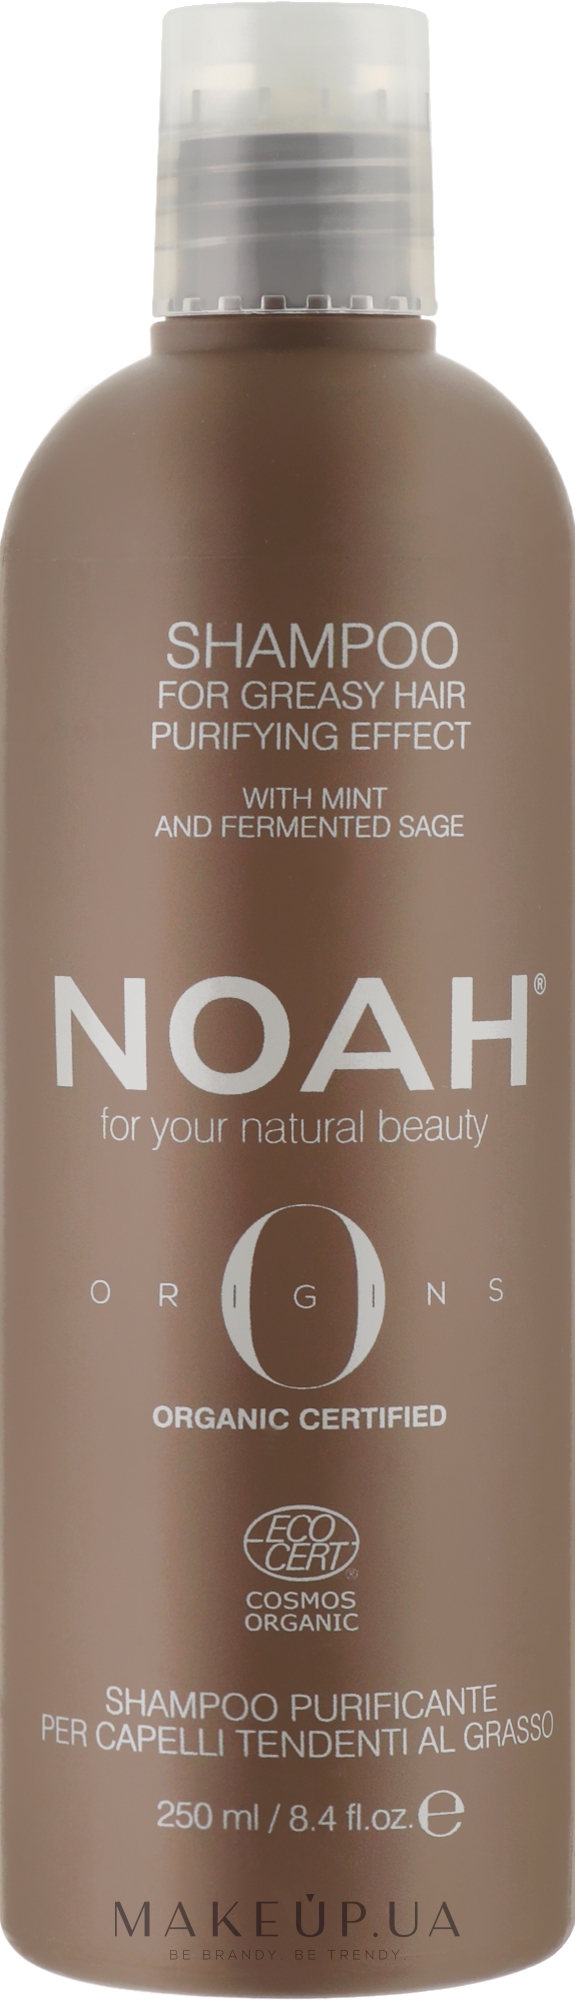 Очищающий шампунь для волос - Noah Origins Purifying Shampoo For Greasy Hair — фото 250ml